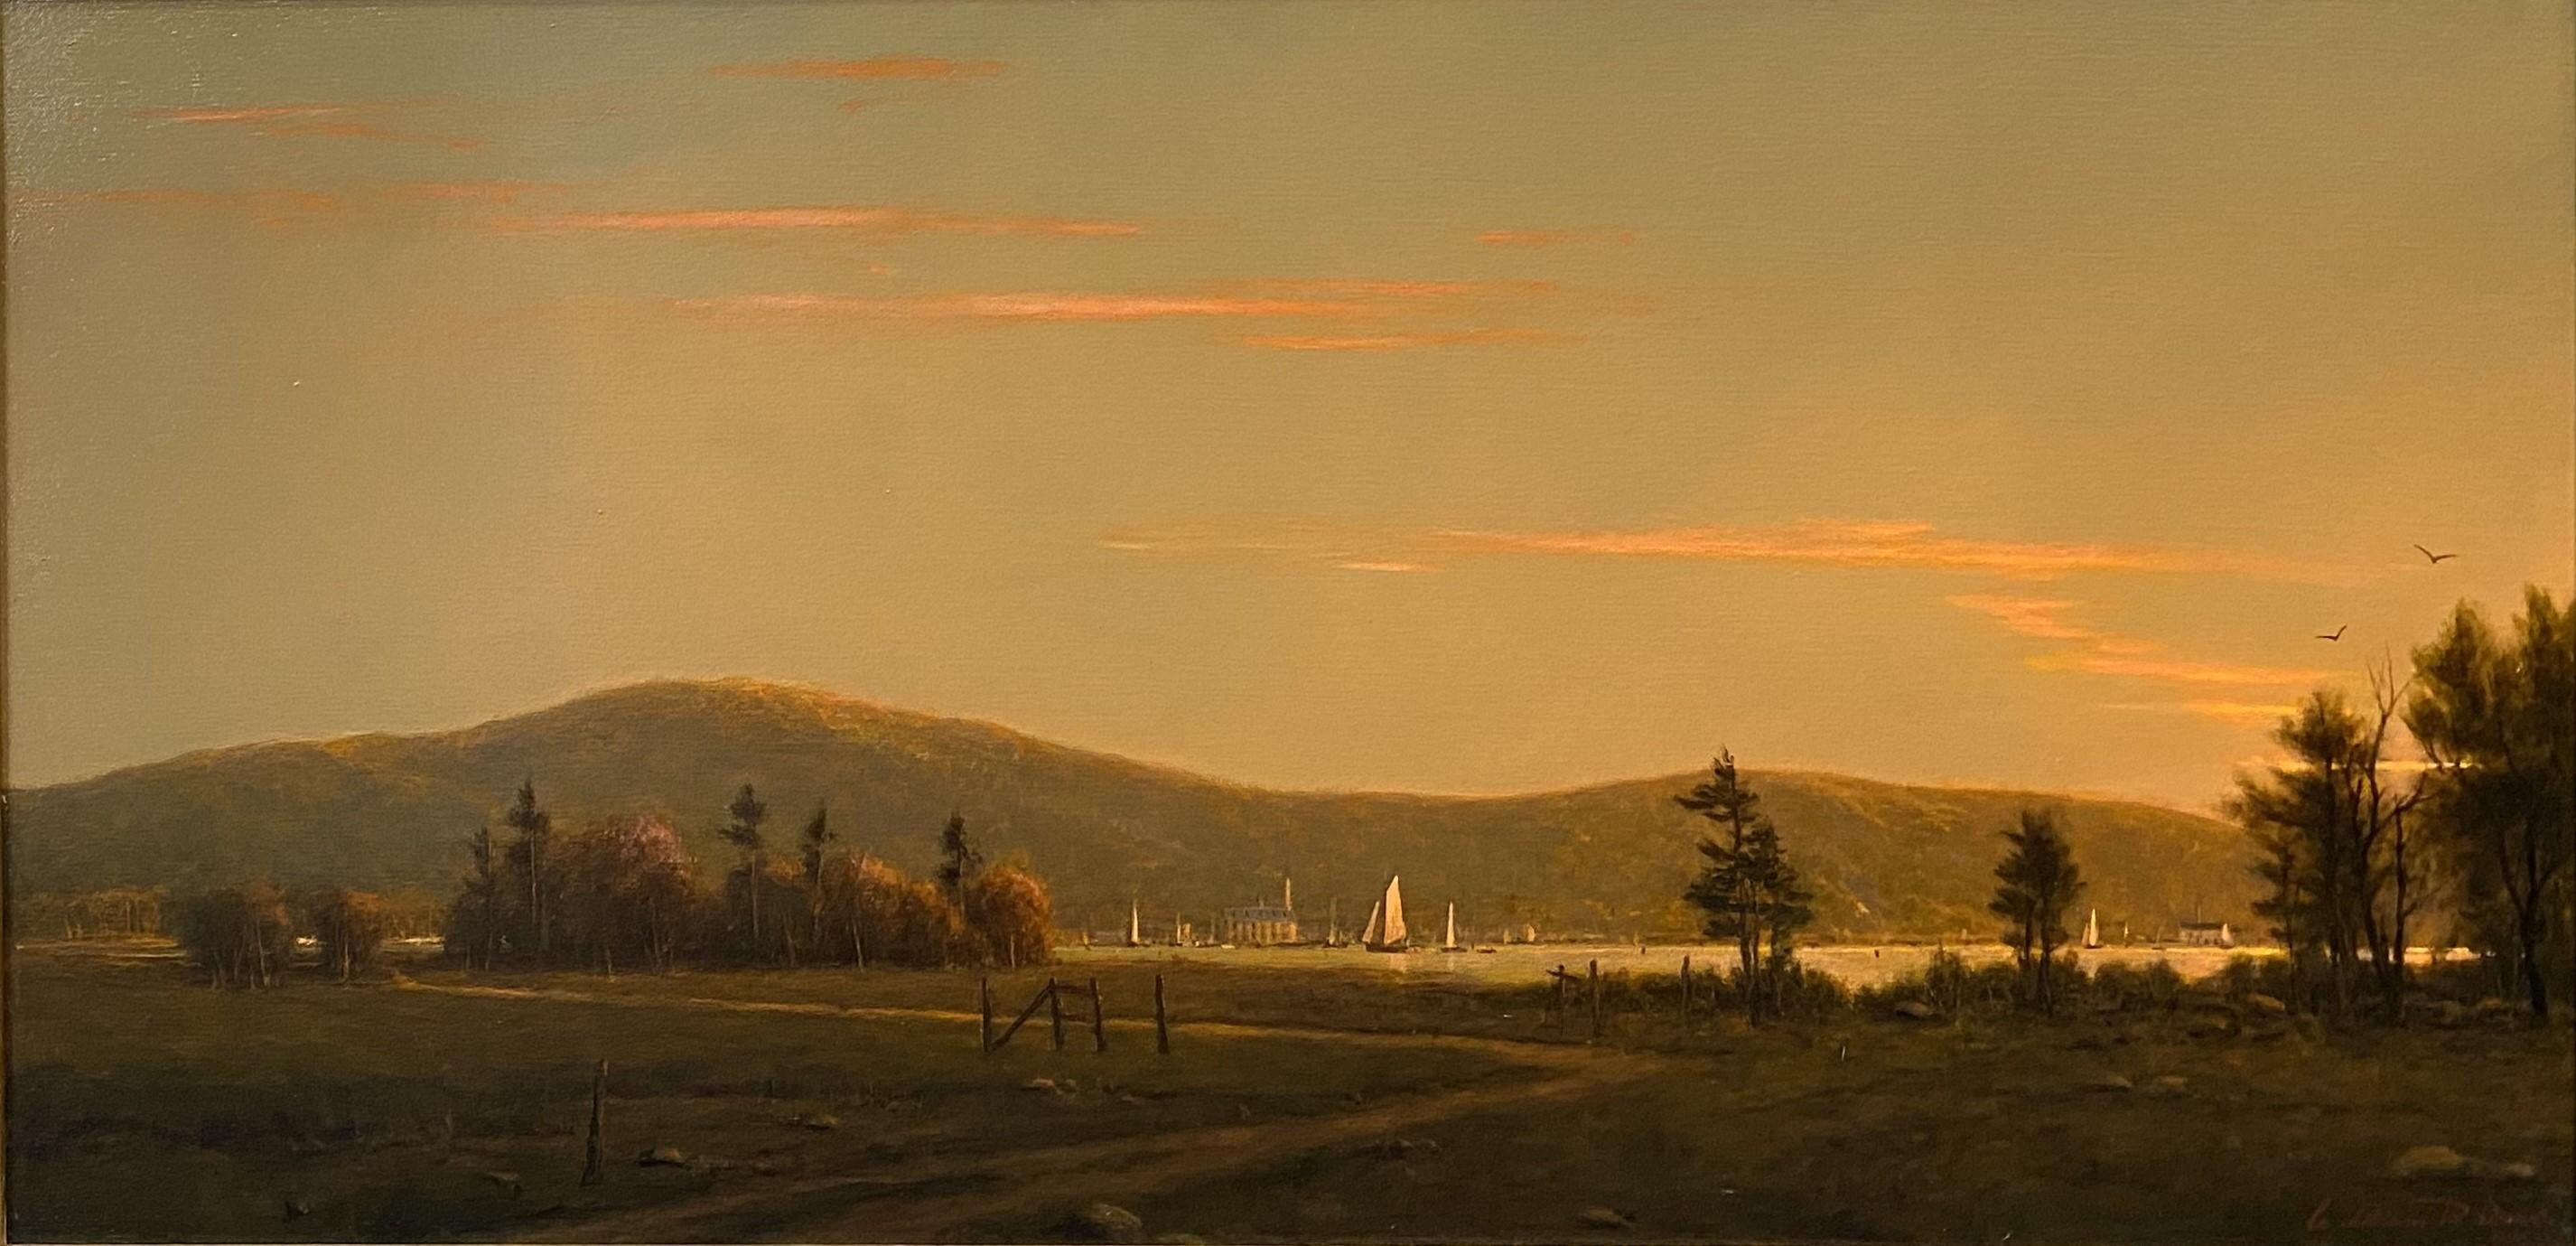 Maine Harbor Sunset - Painting by William R. Davis